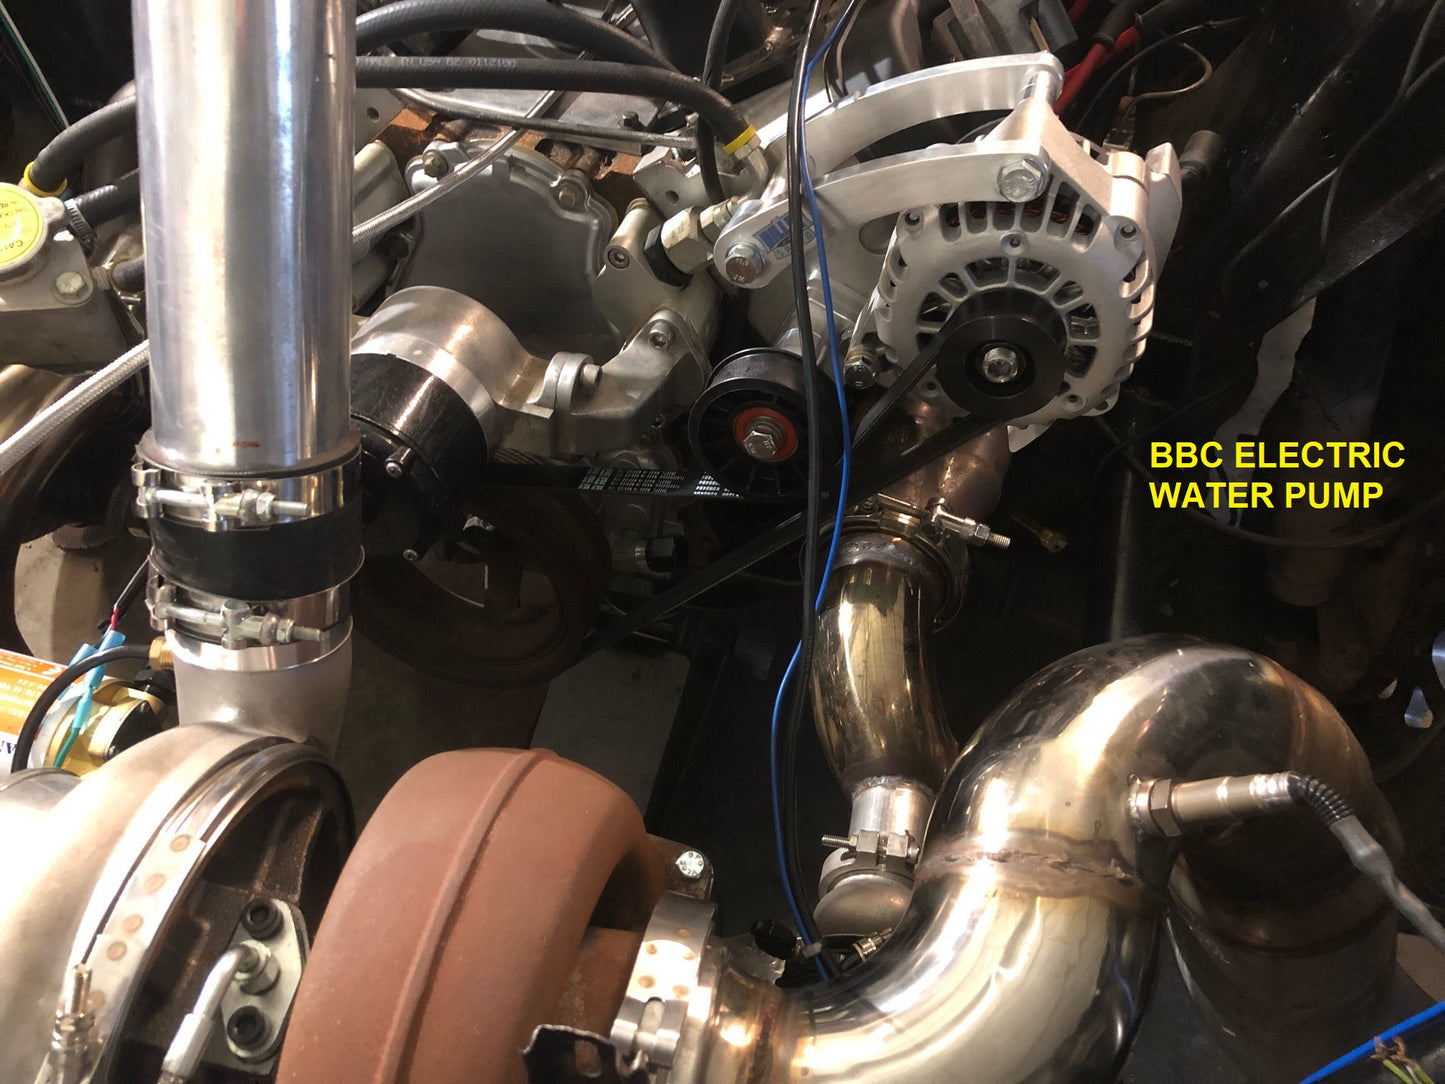 LS Alternator Only Bracket and Adjustable Idler System *Type 2 - Truck Balancer Only* - Standard or Electric Water Pump